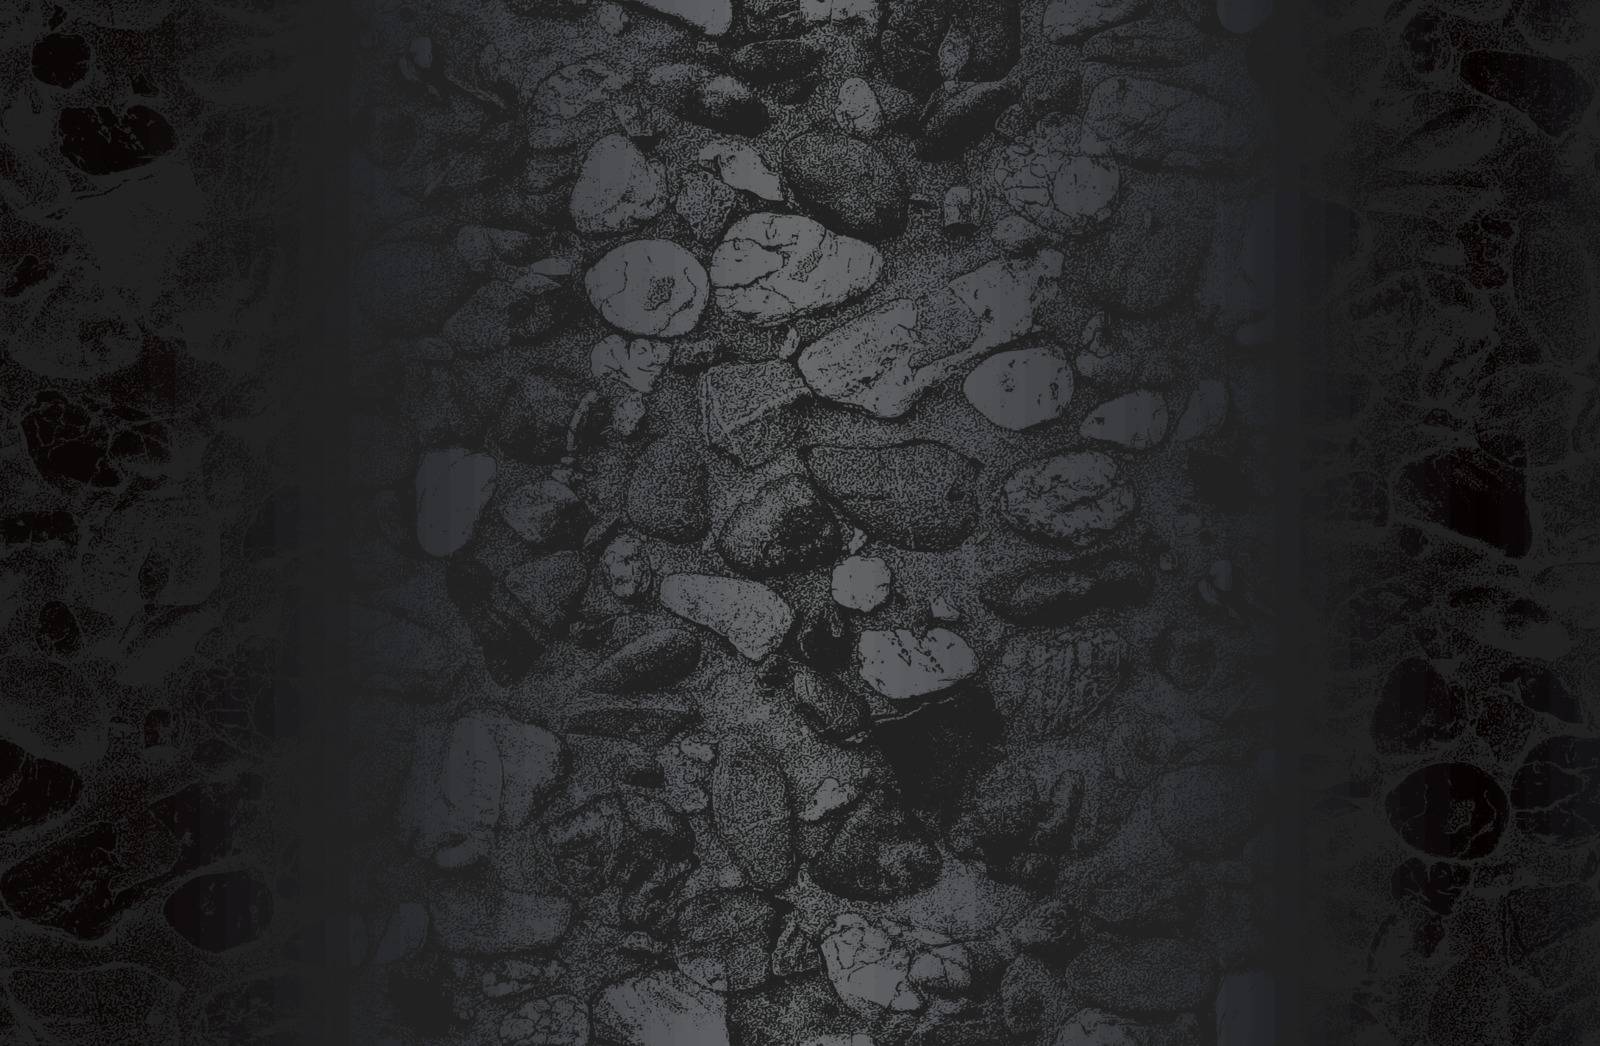 Luxury black metal gradient background with distressed stones, rocks, pebbles, macadam texture. Vector illustration